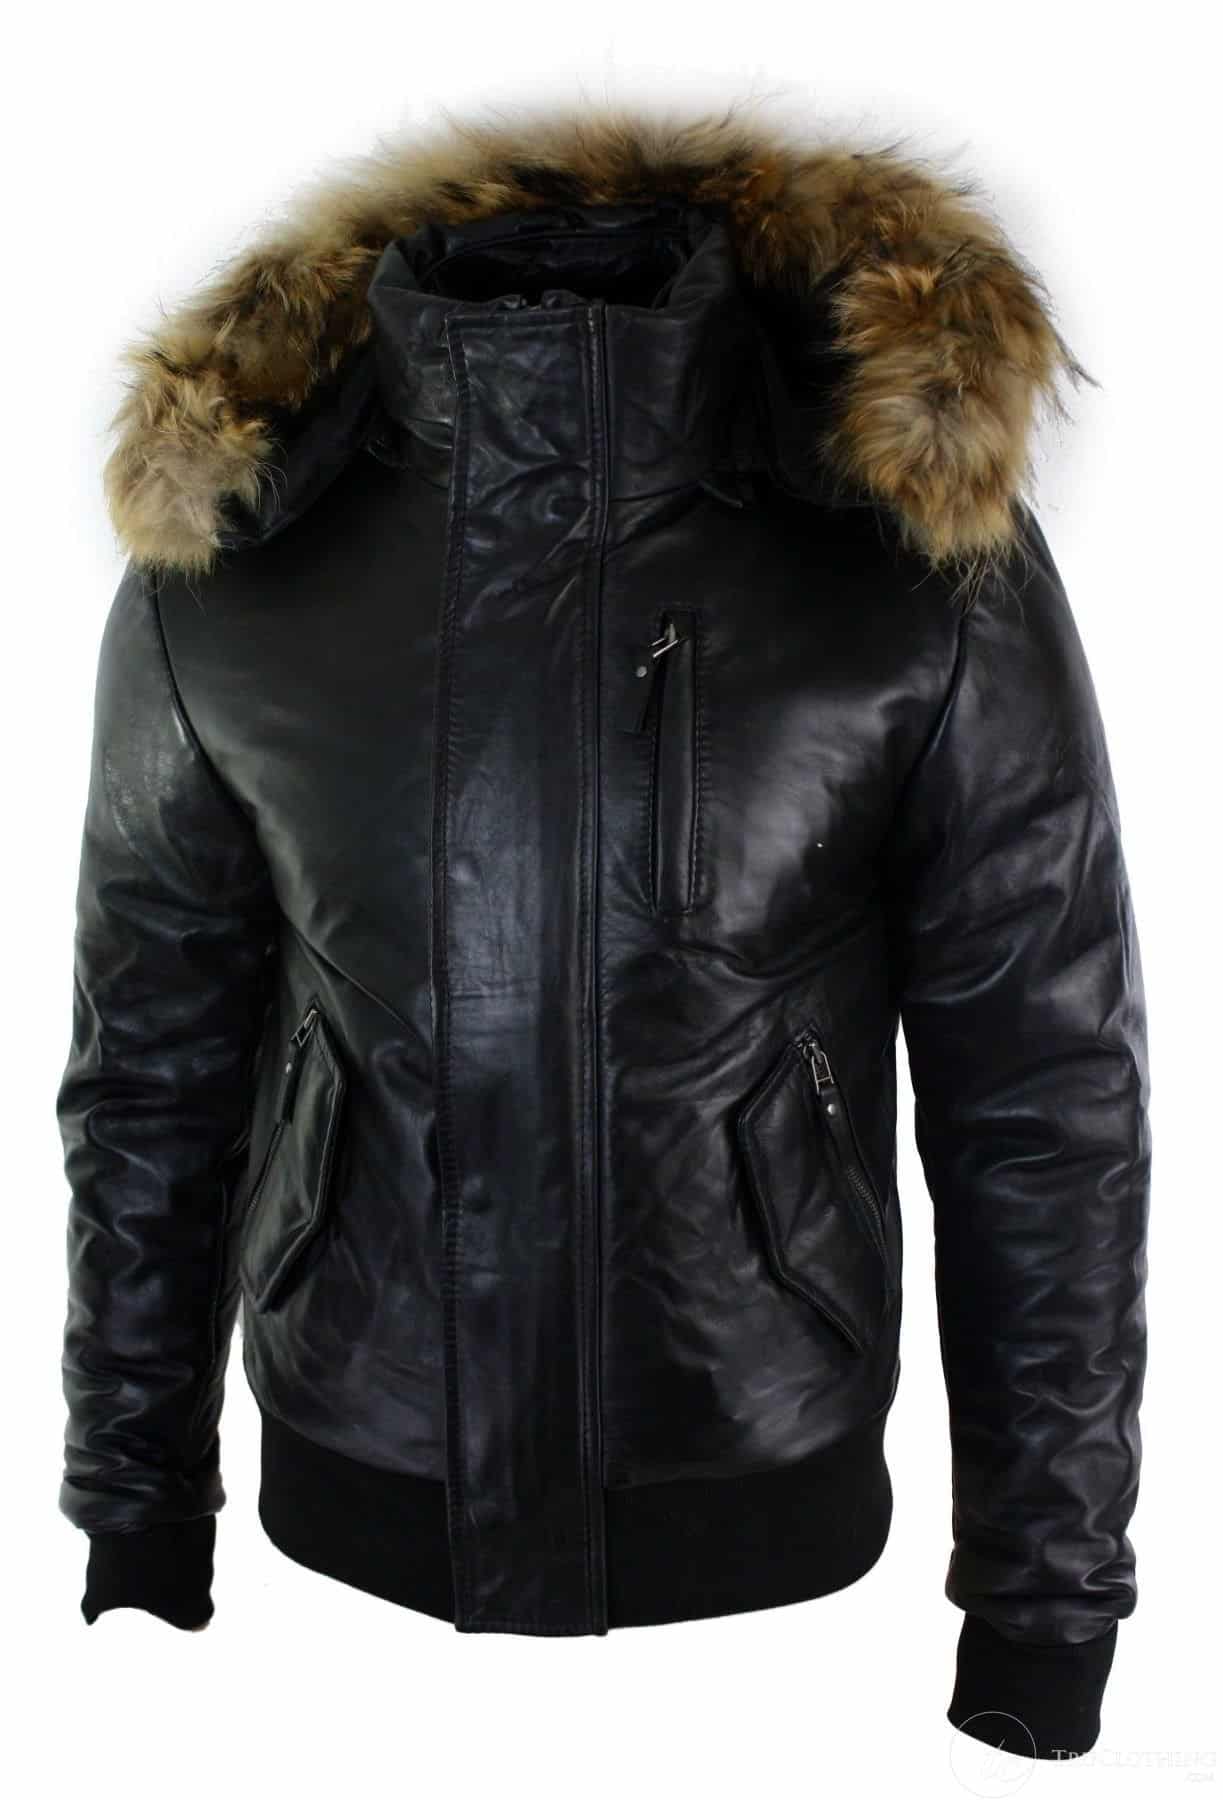 Mens Real Fur Hood Bomber Leather Jacket Black Puffer Padded-Black: Buy